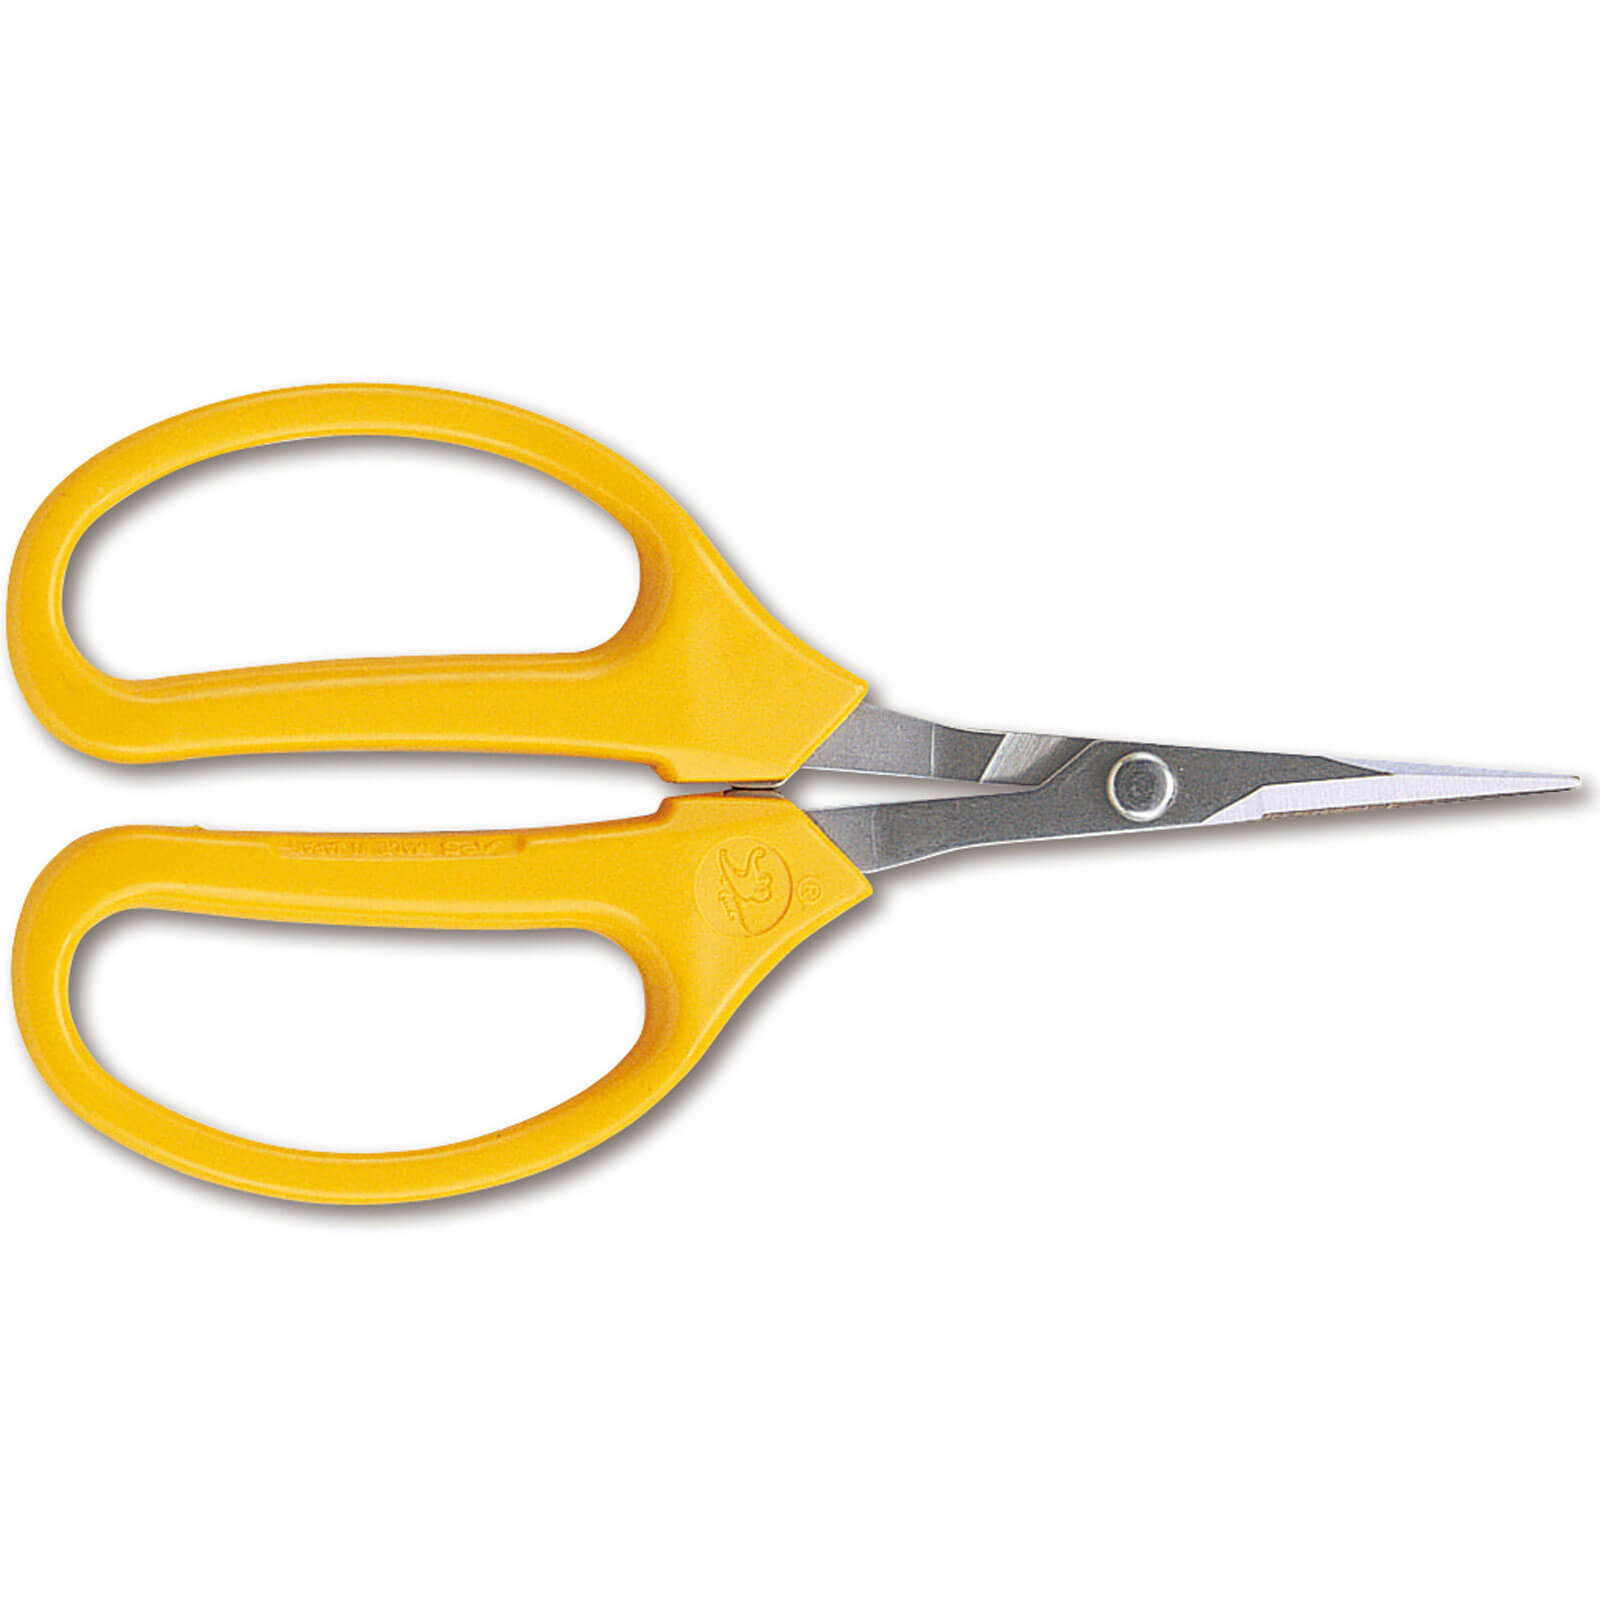 Image of ARS 320 Angled Stainless Steel Fruit Pruner Scissors